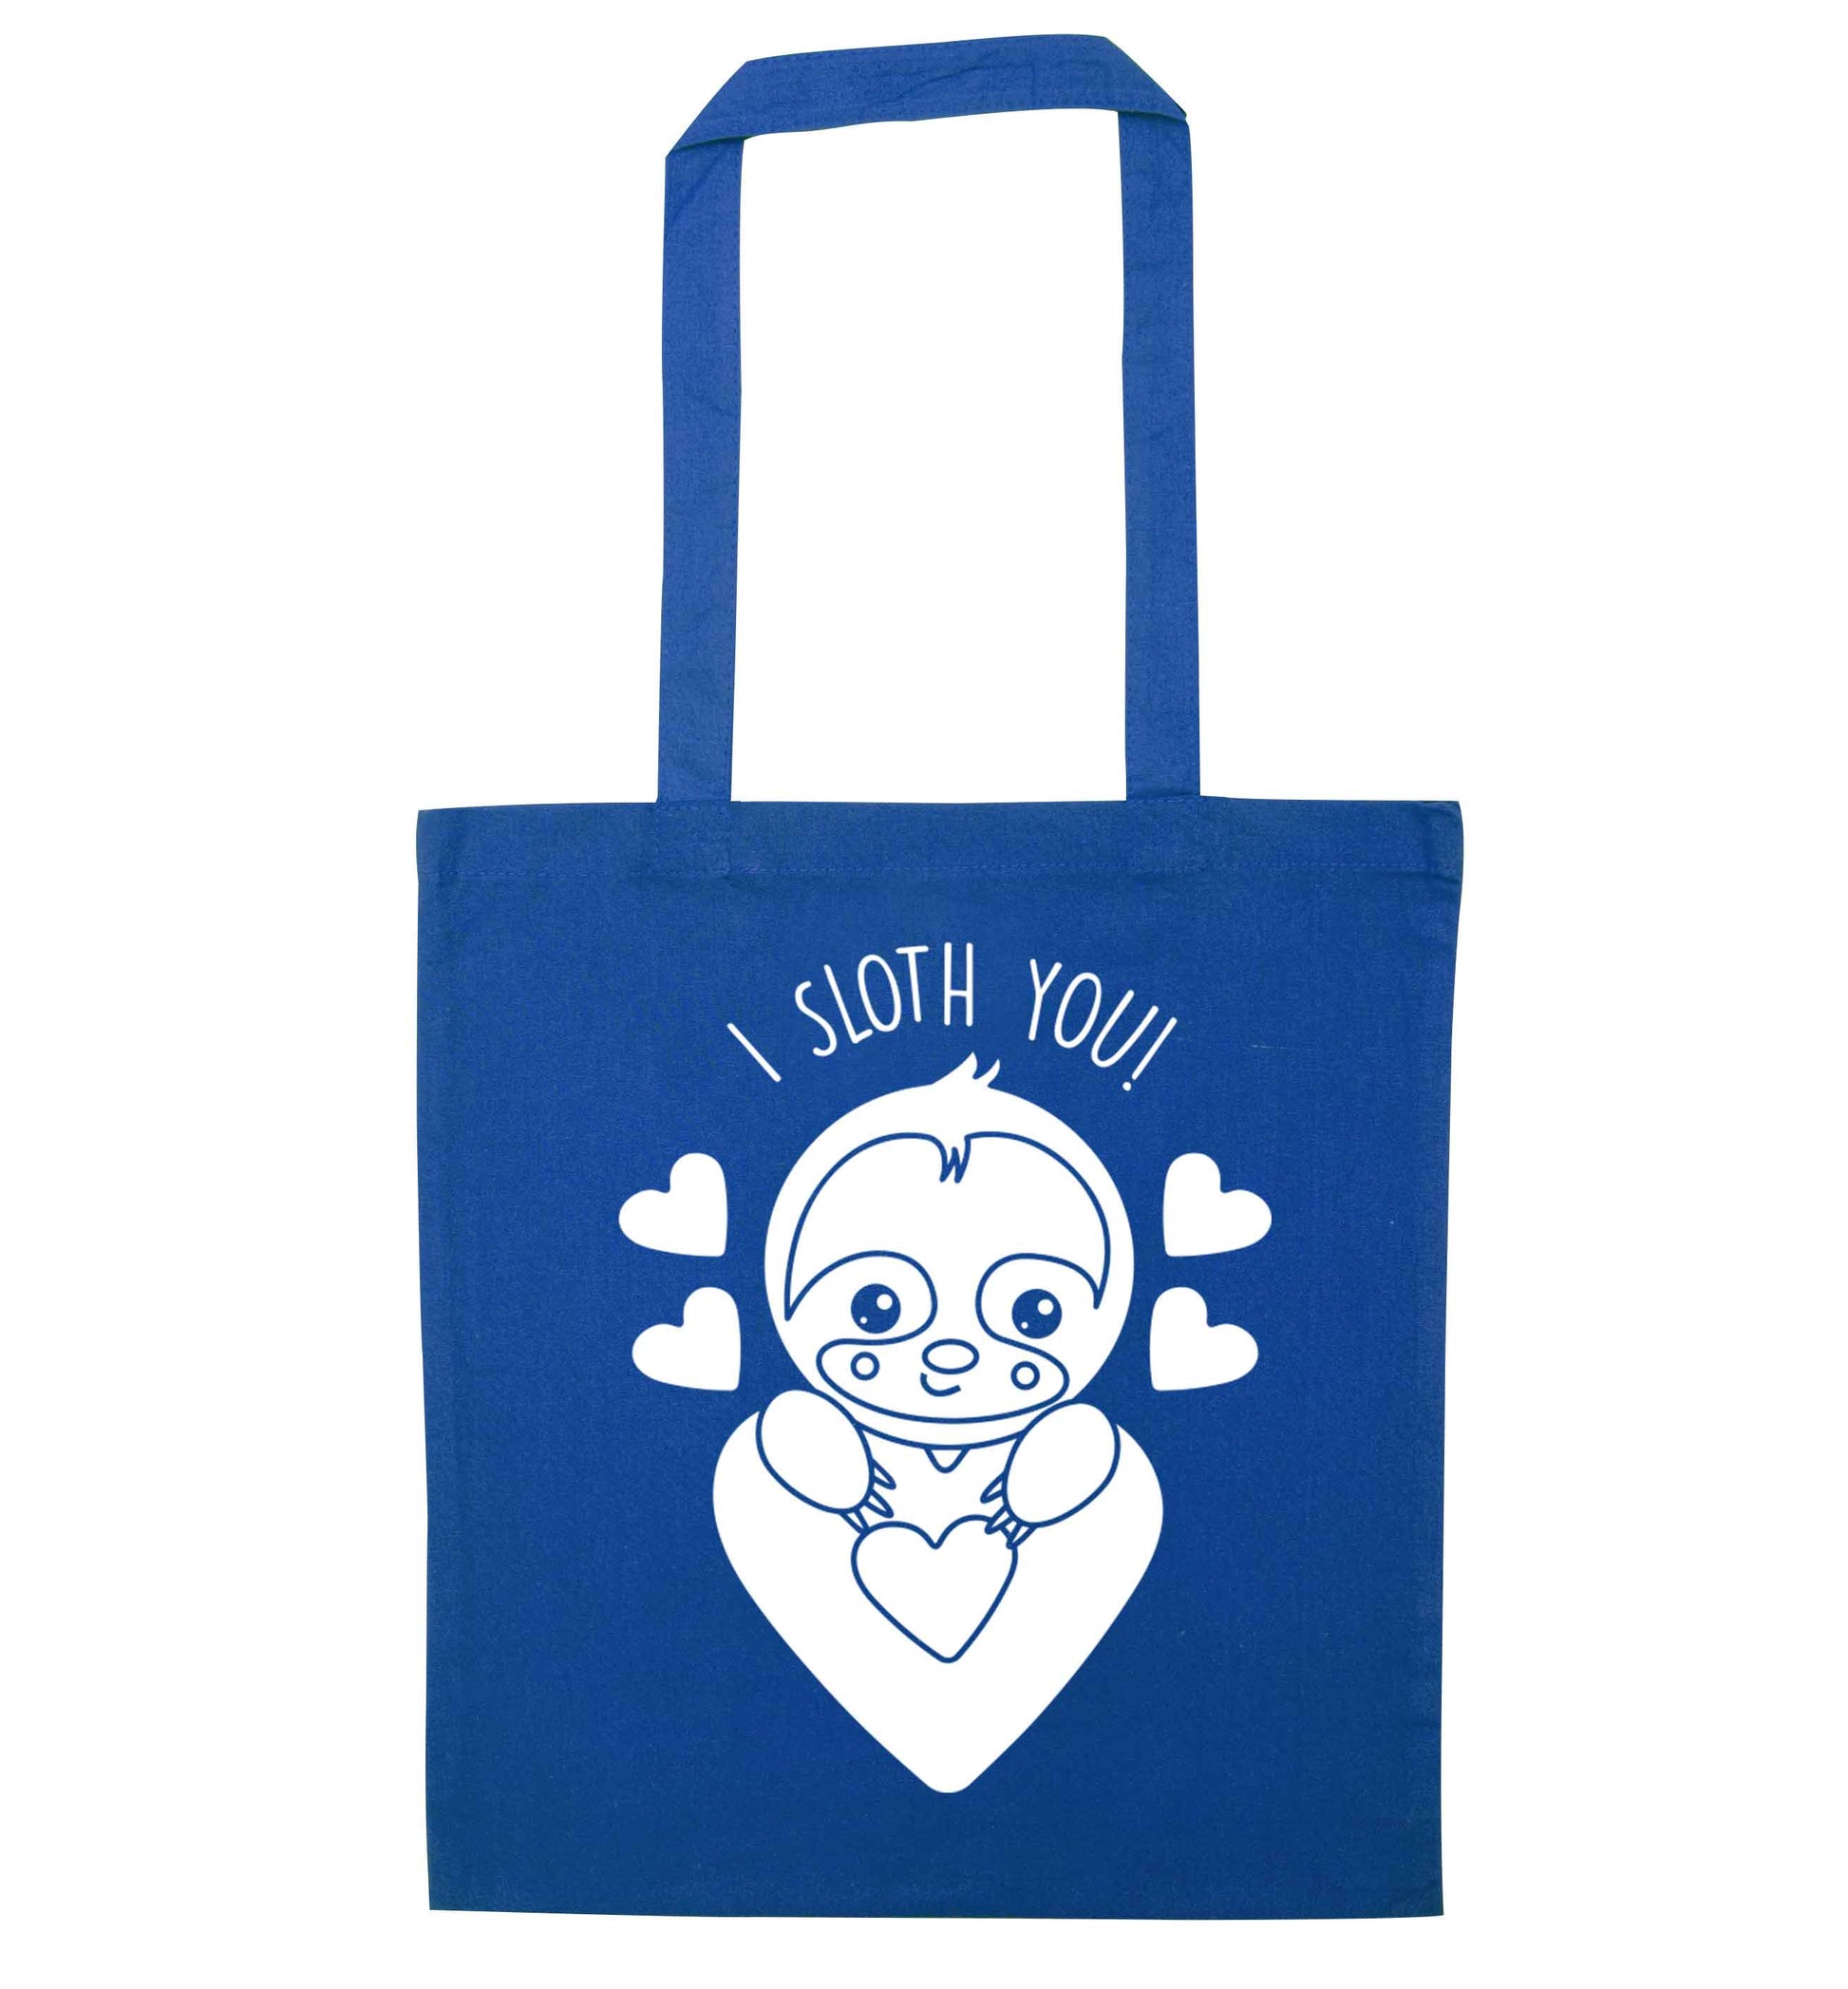 I sloth you blue tote bag